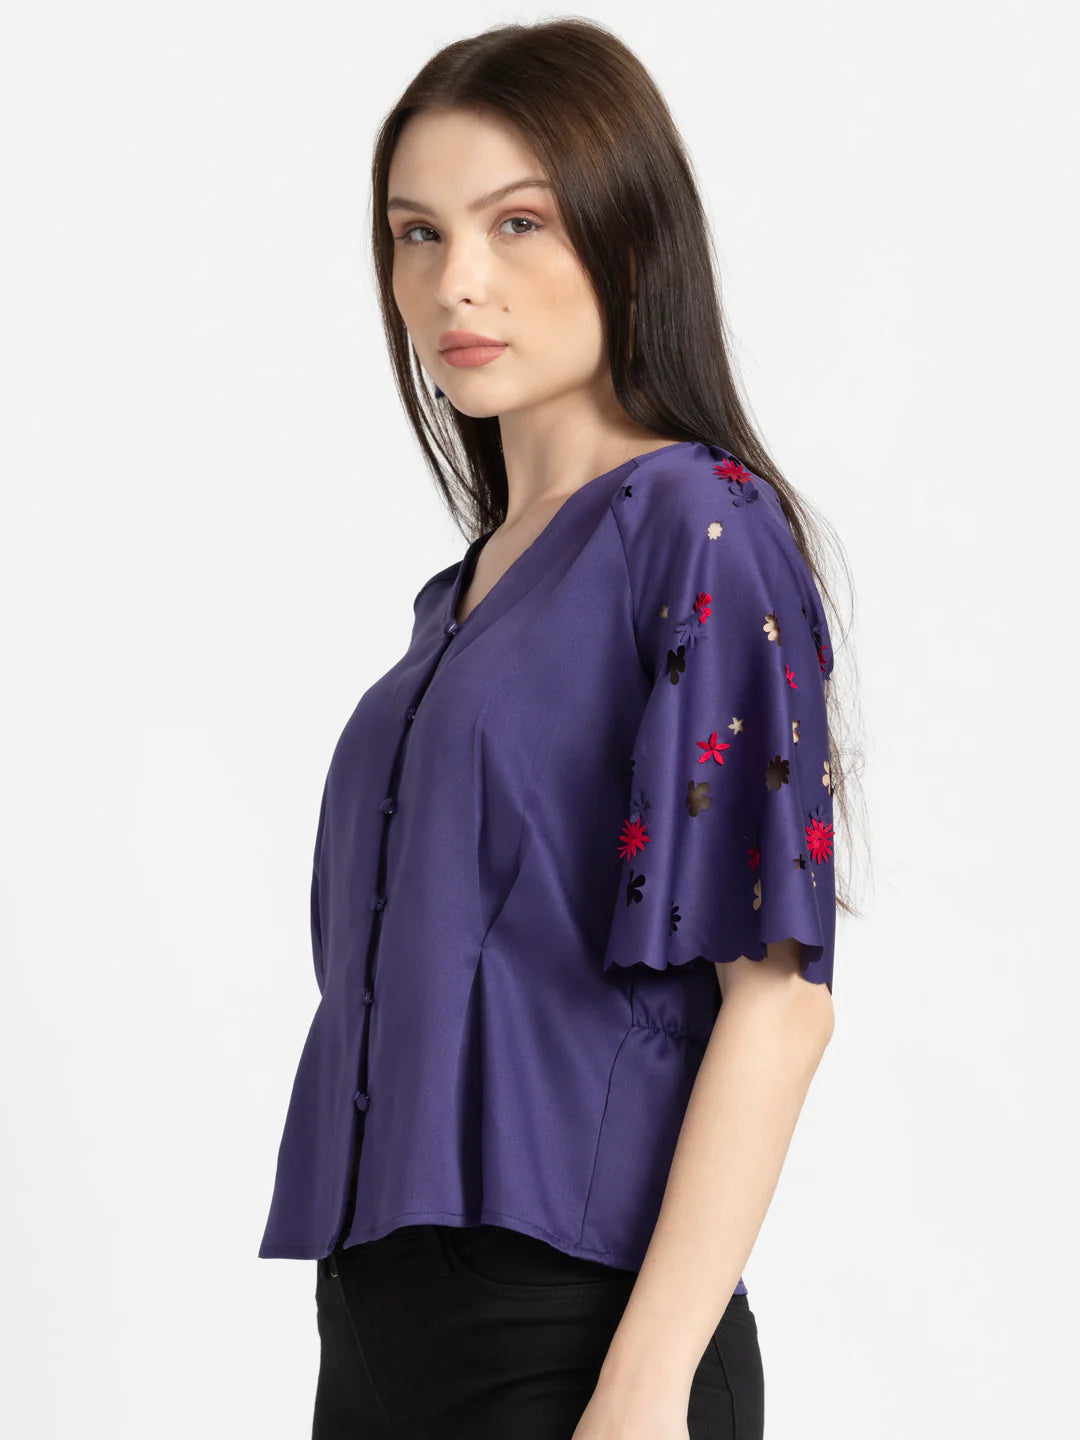 Violet Peplum Shirt for Women | Radiant Orchid Elegance Shirt